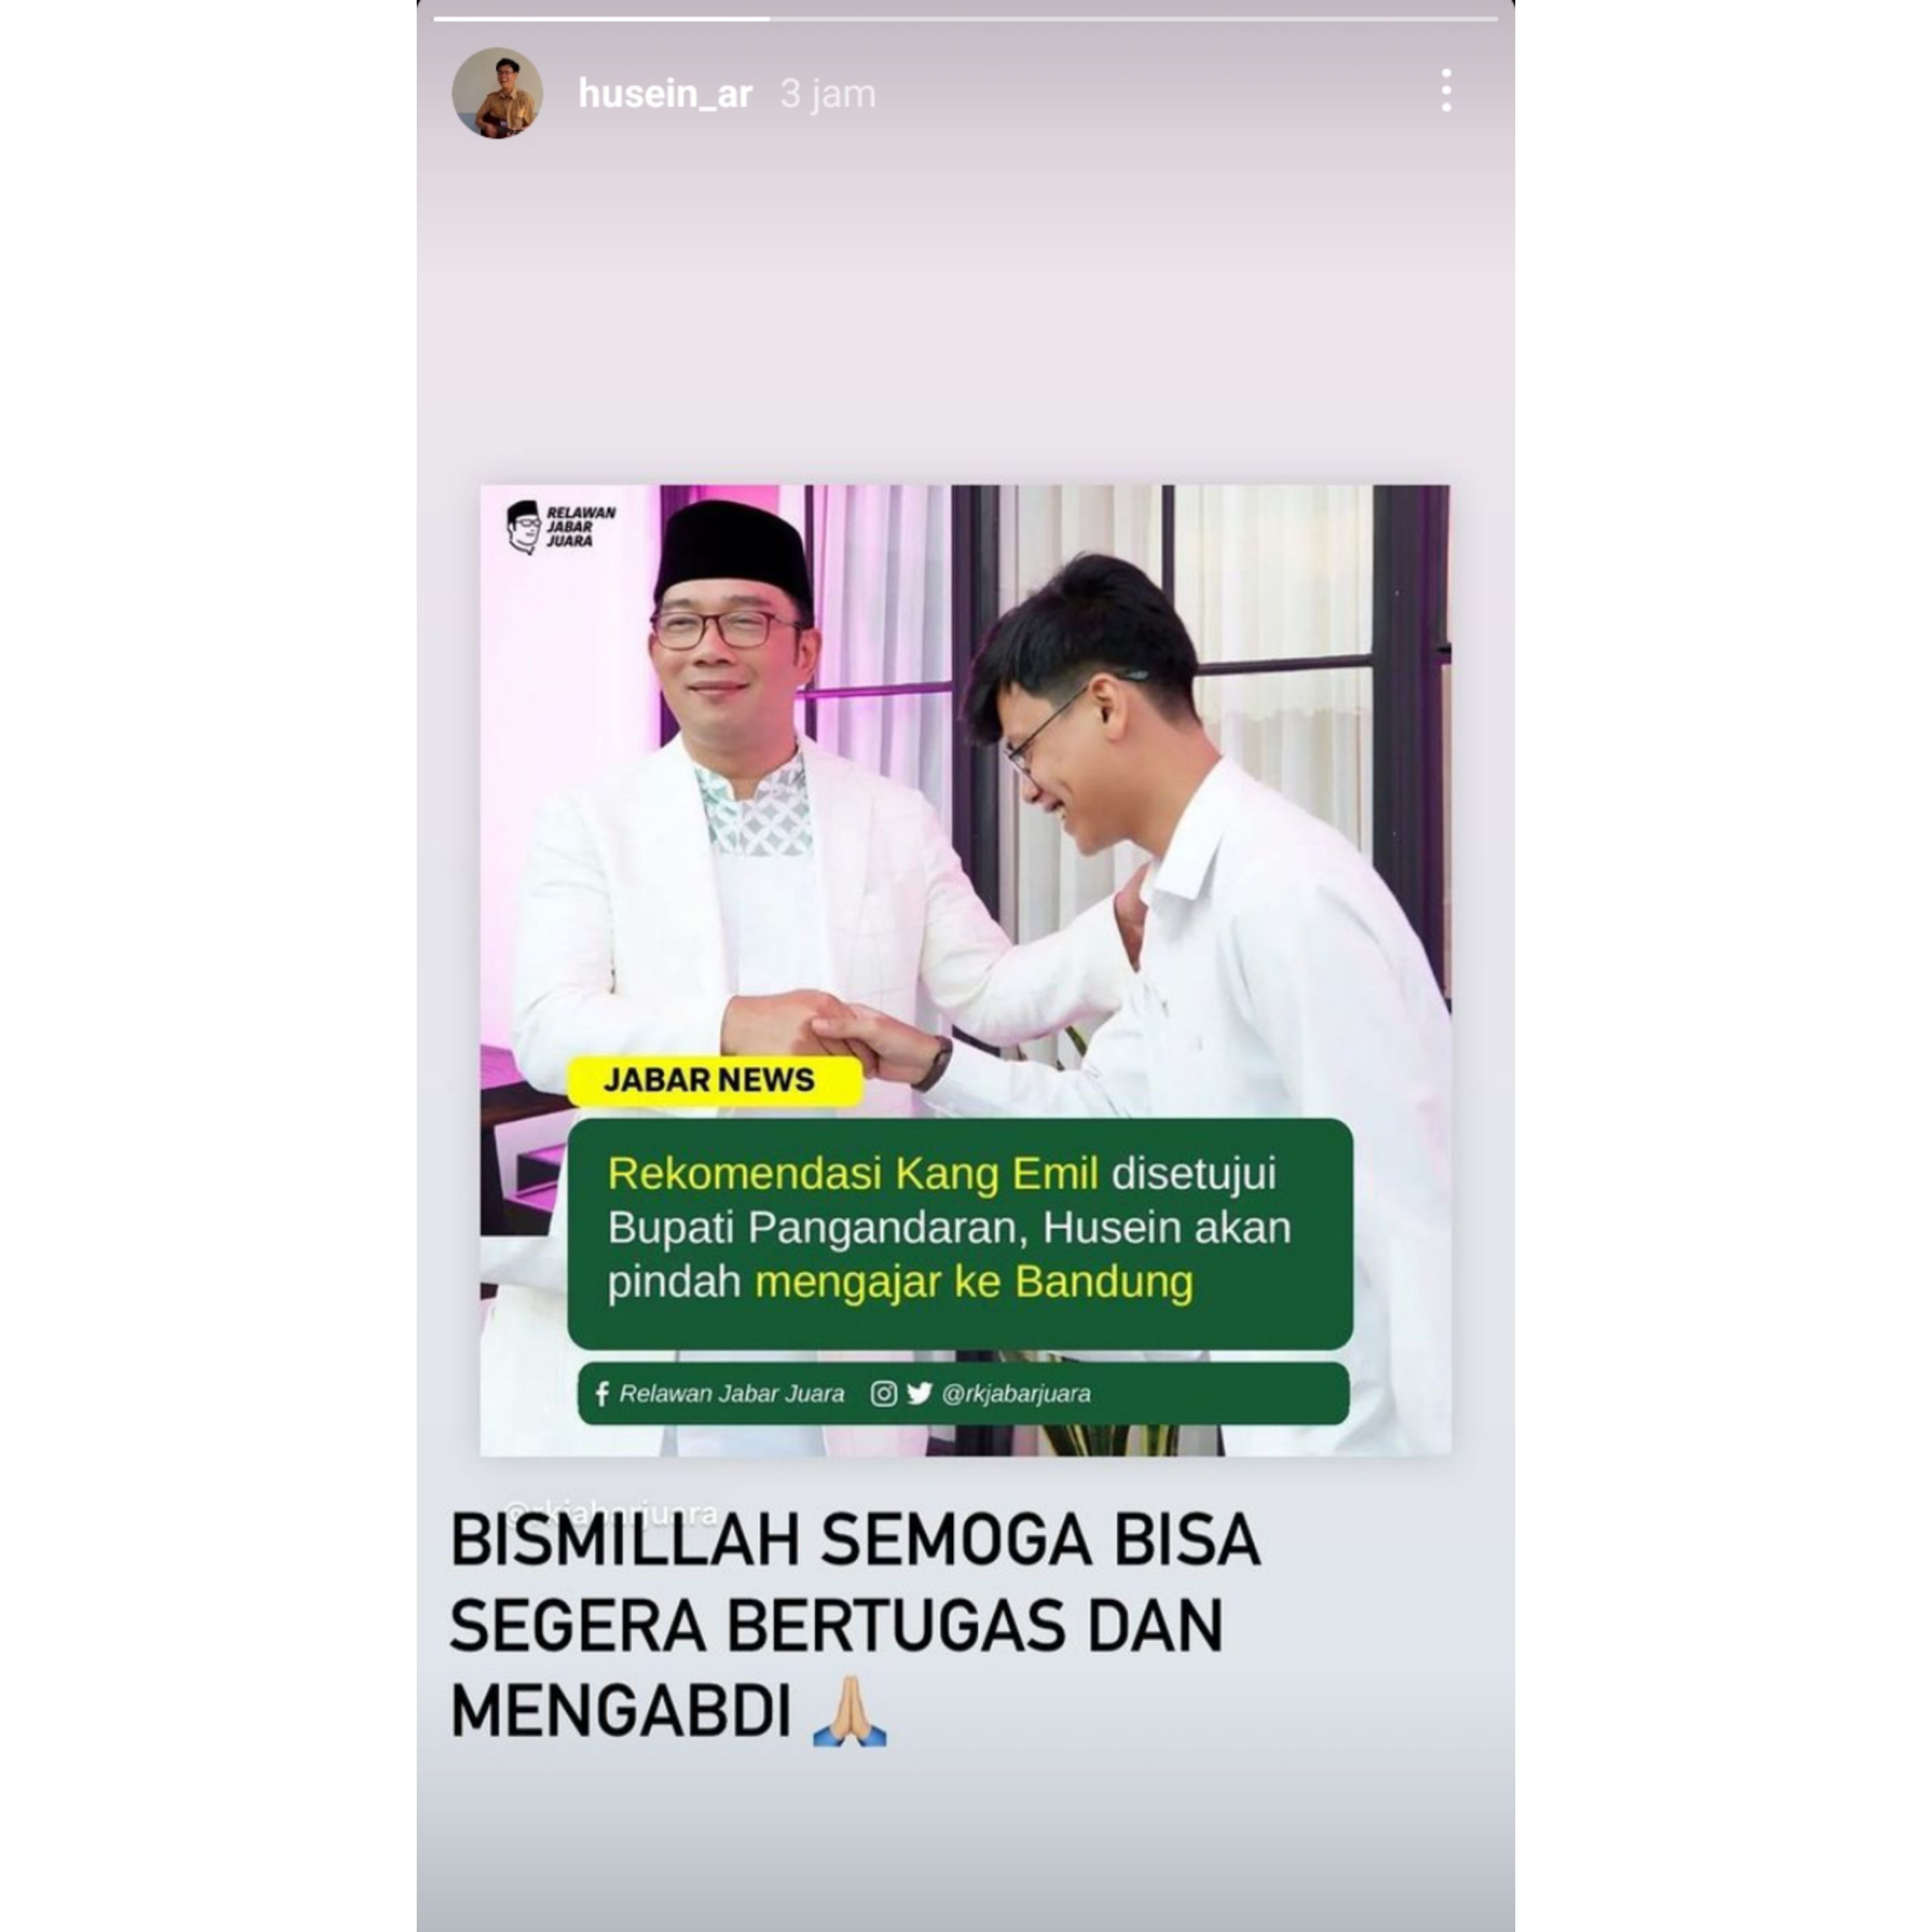 Husein Ali Rafsanjani Akan Pindah Tugas Mengajar di Bandung Pasca Viral Terkait Pungli